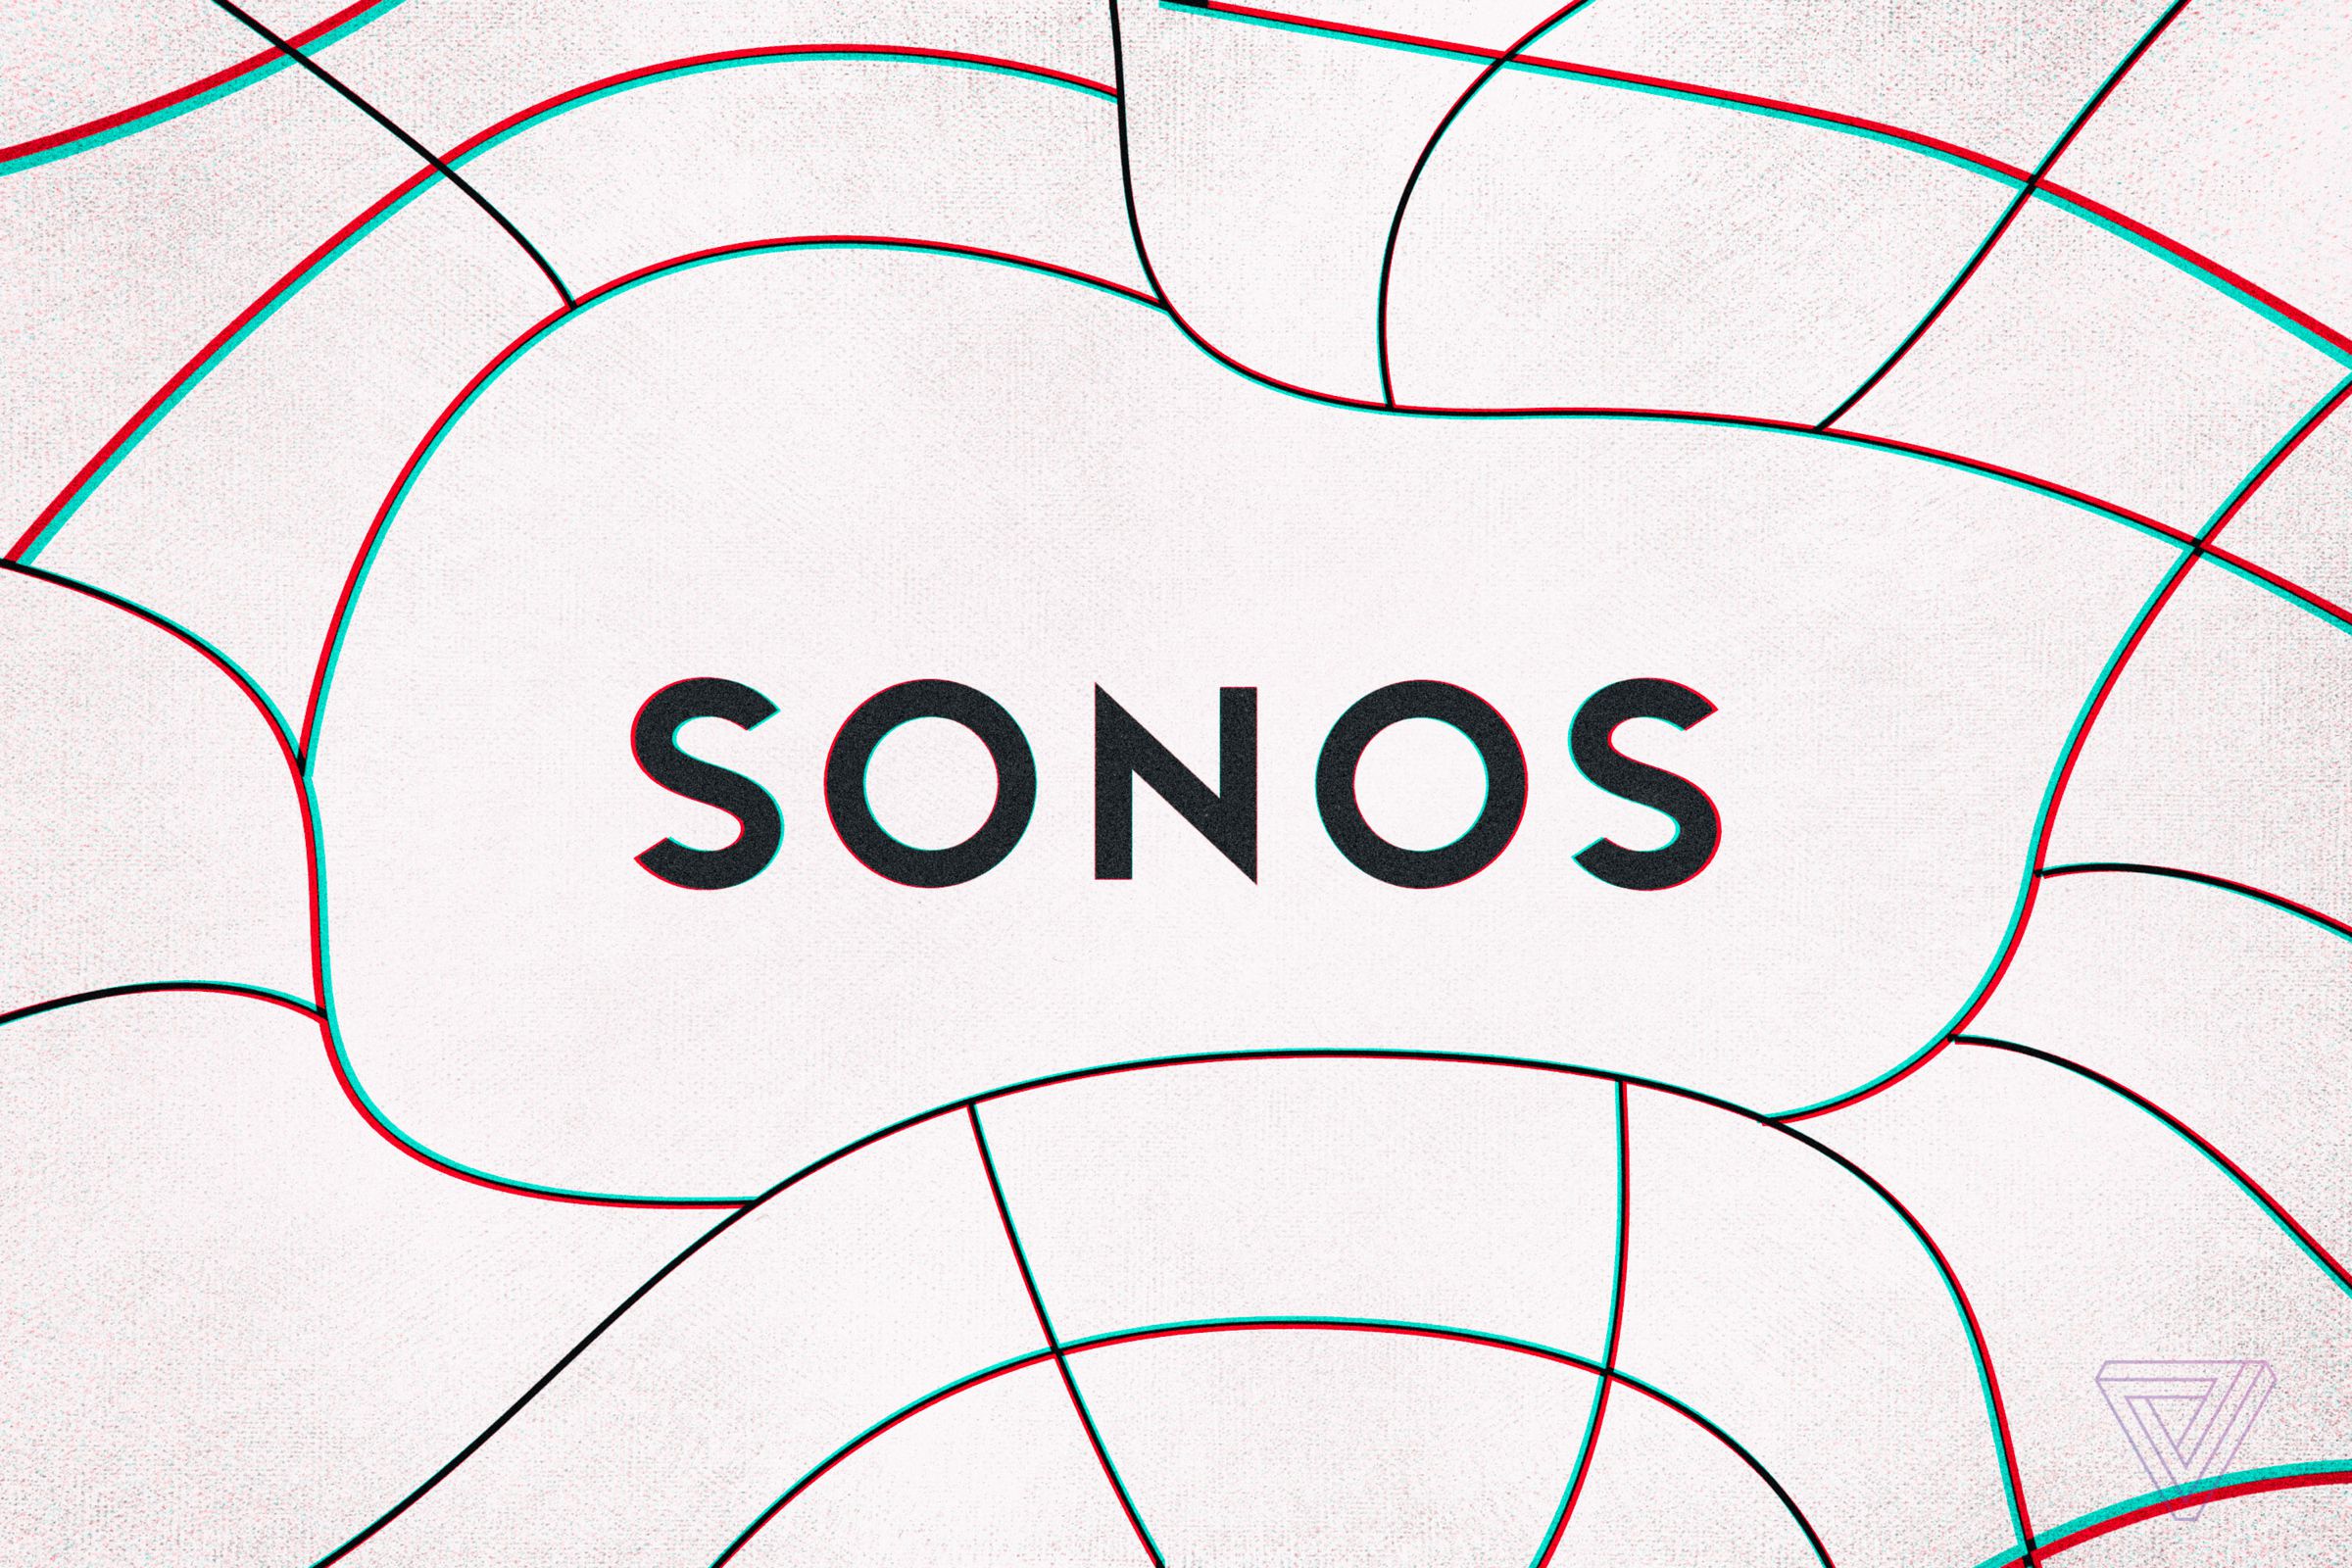 An illustration of the Sonos logo